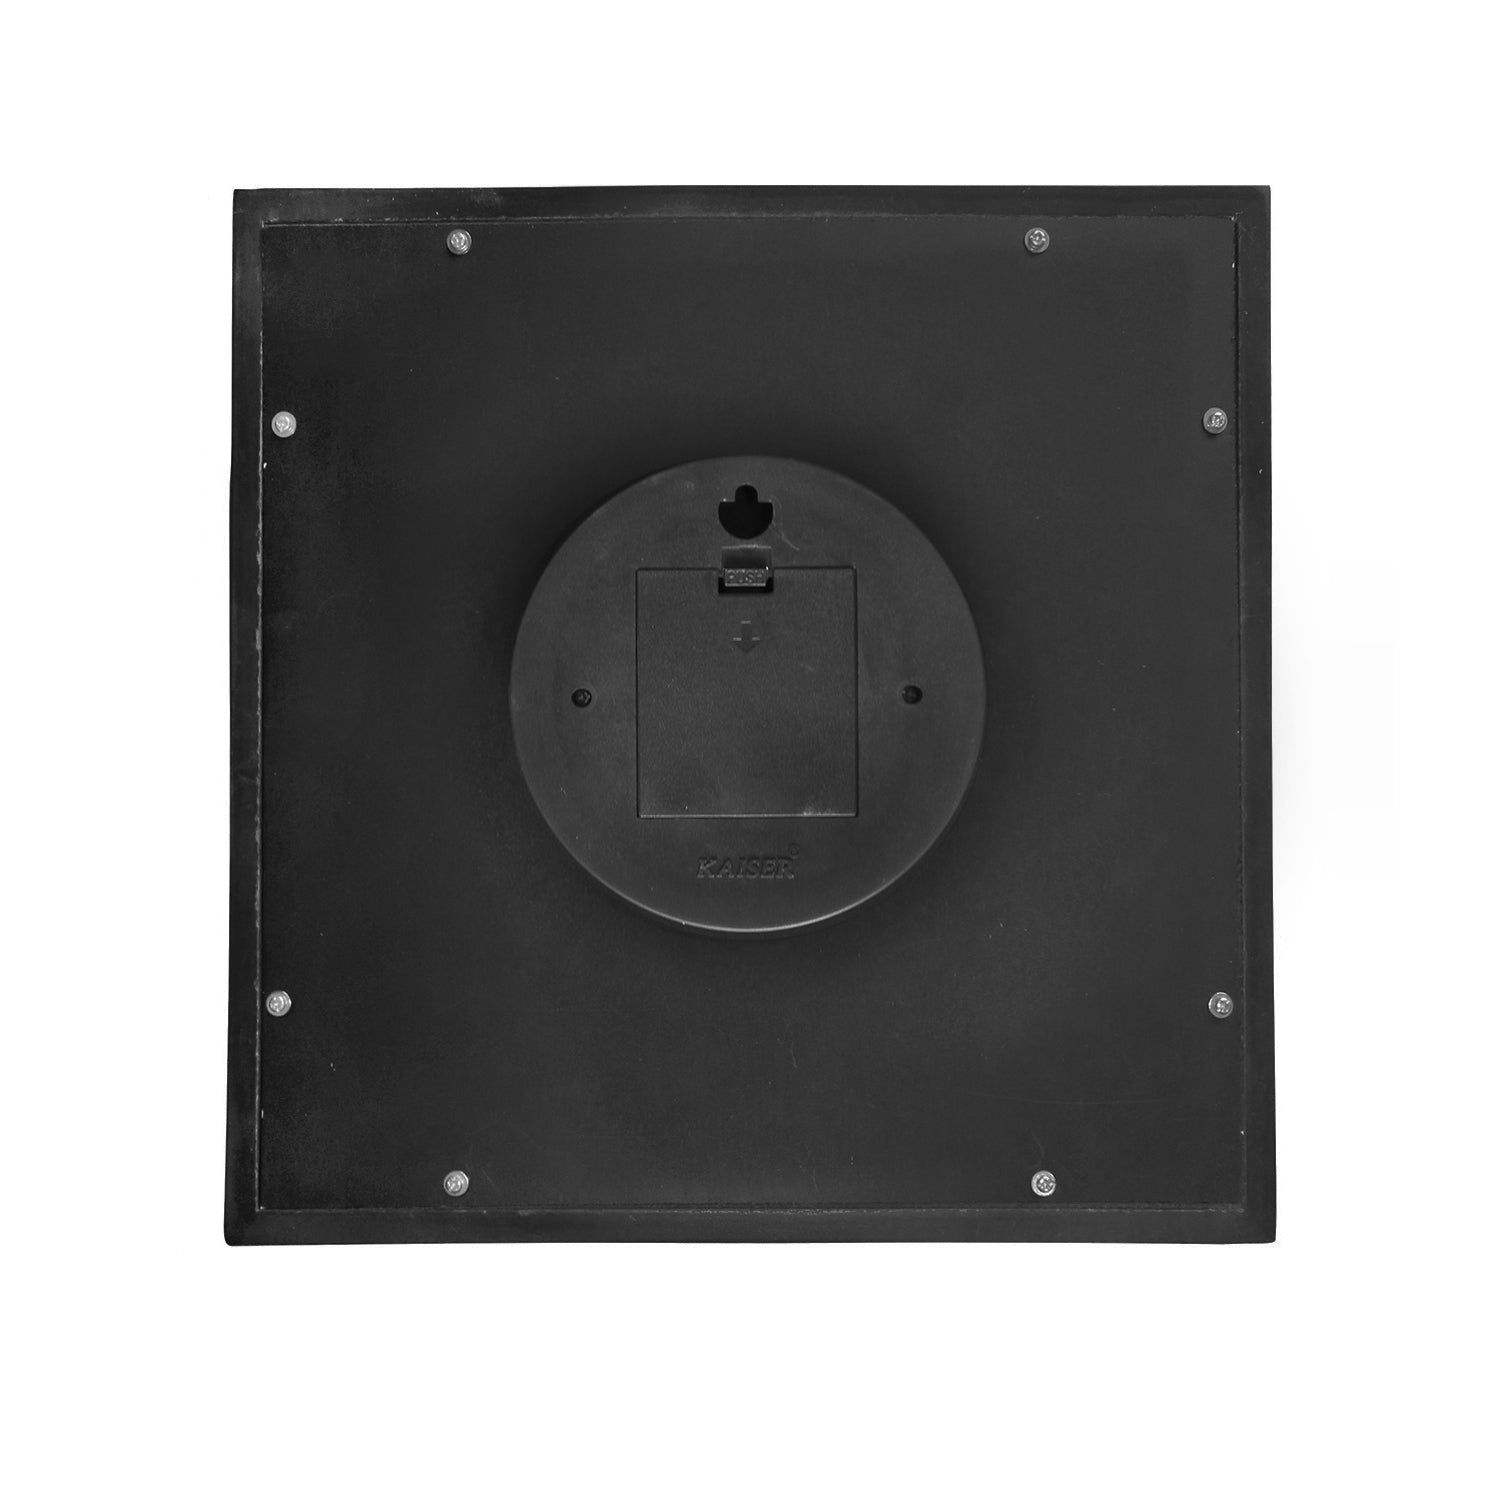 Black square wooden analog wall clock(28 cm x 28 cm) 4